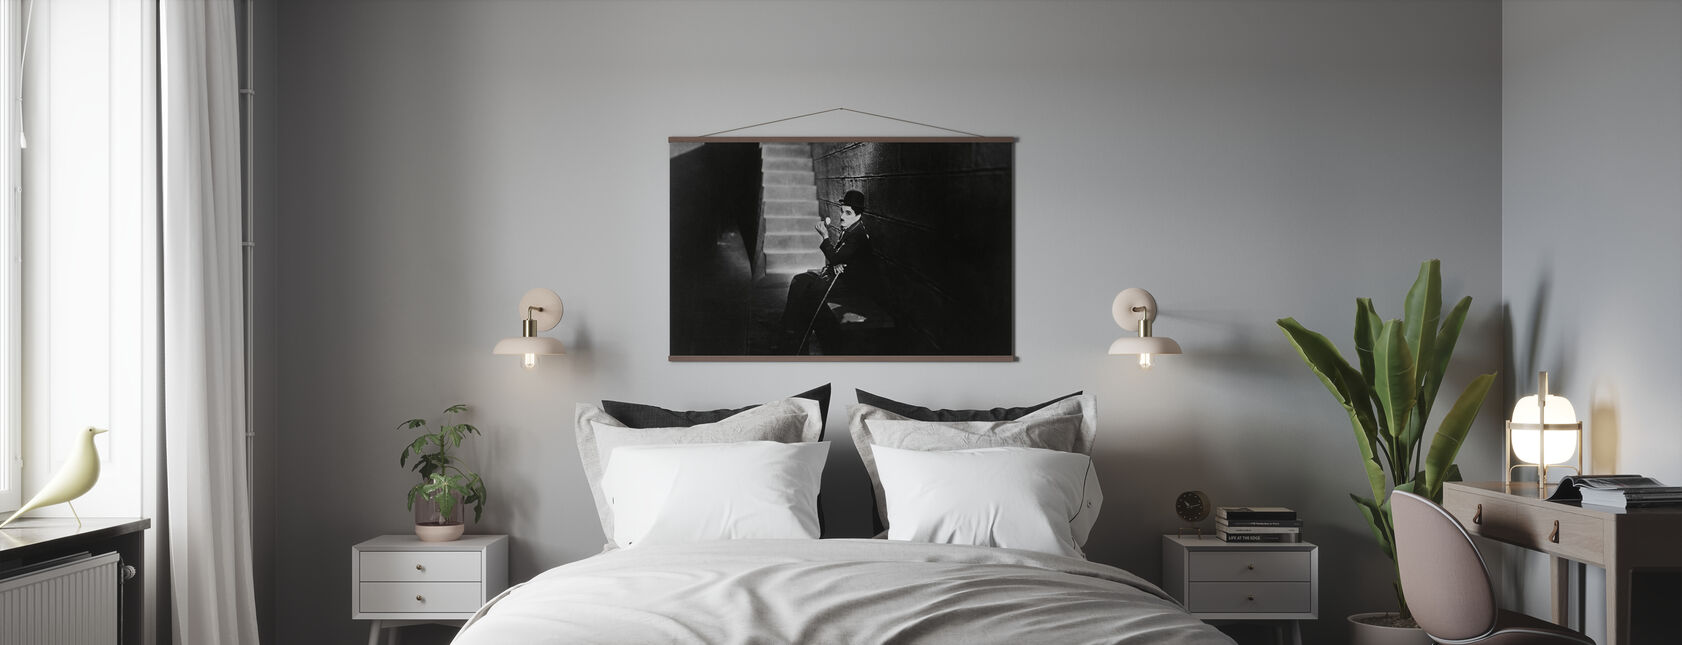 City Lights - Charlie Chaplin - Poster - Bedroom